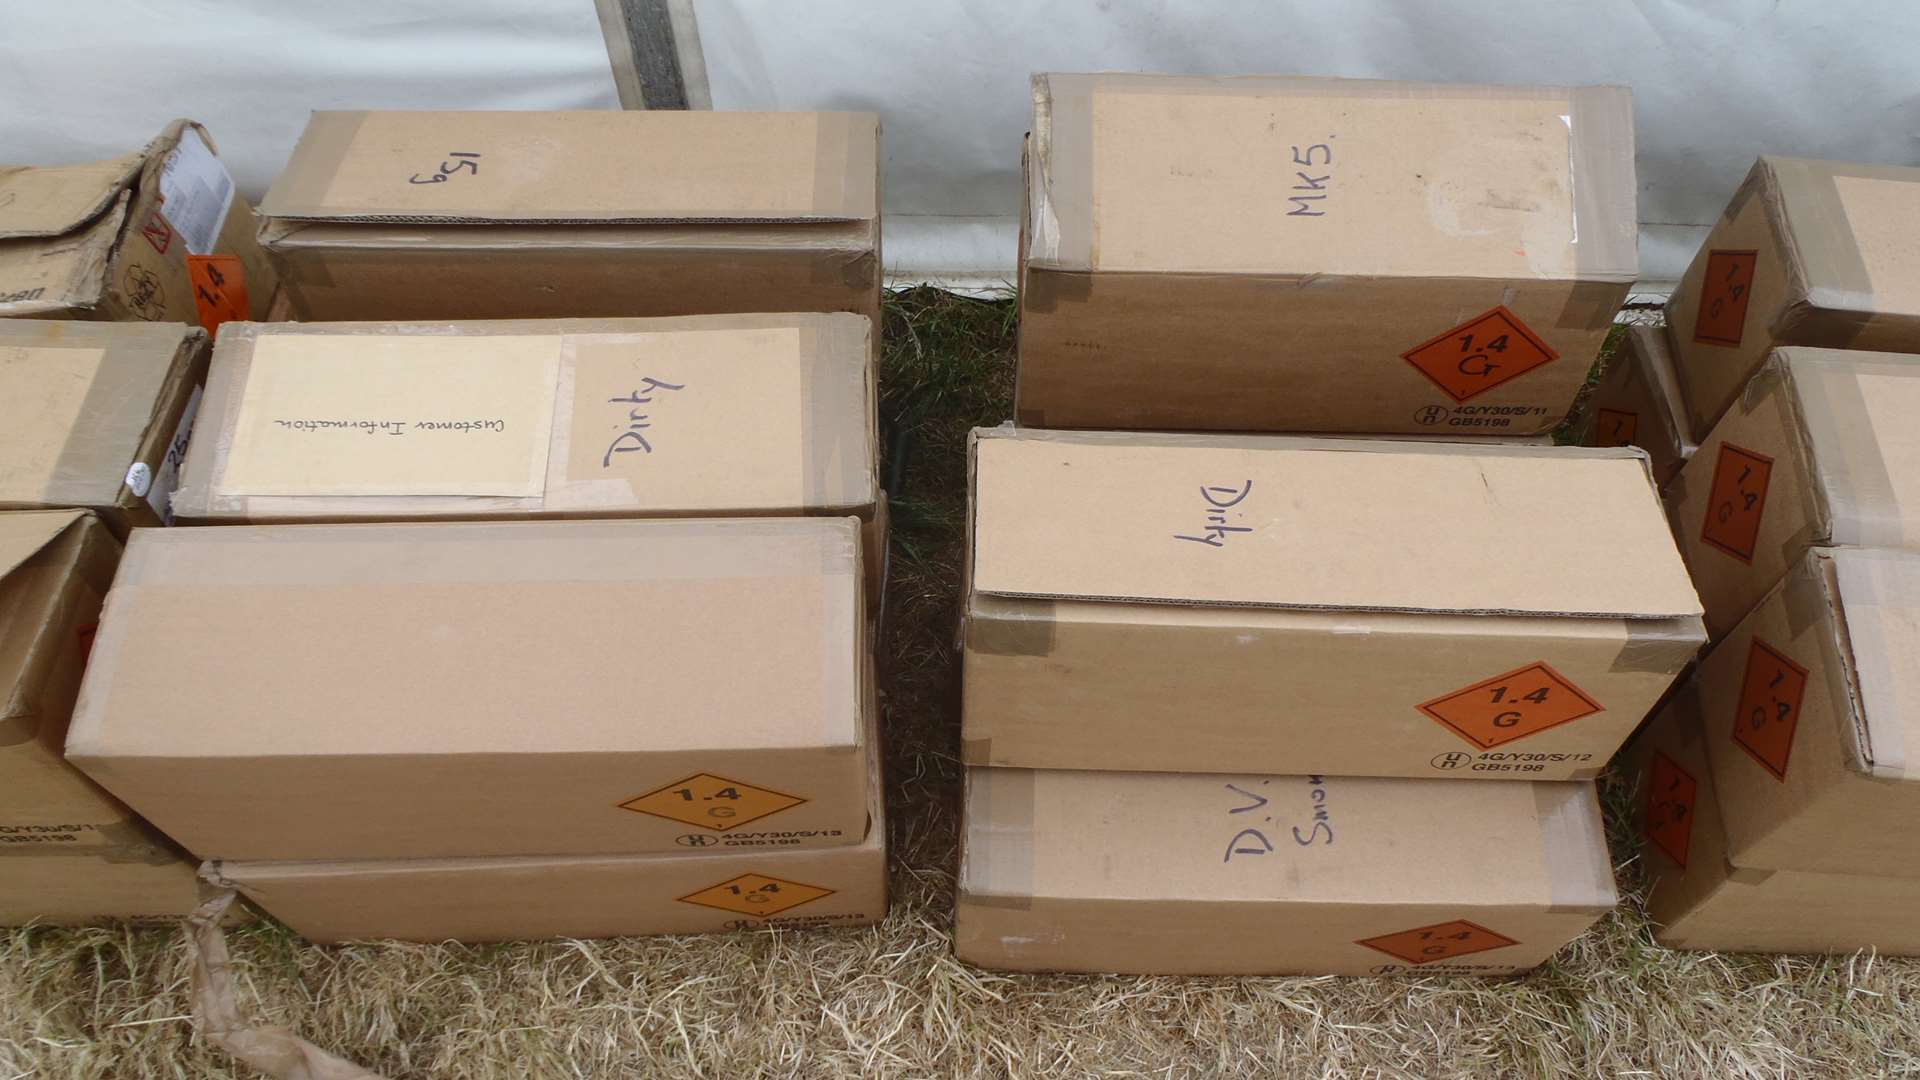 Items stored in boxes displaying an orange diamond explosive warning